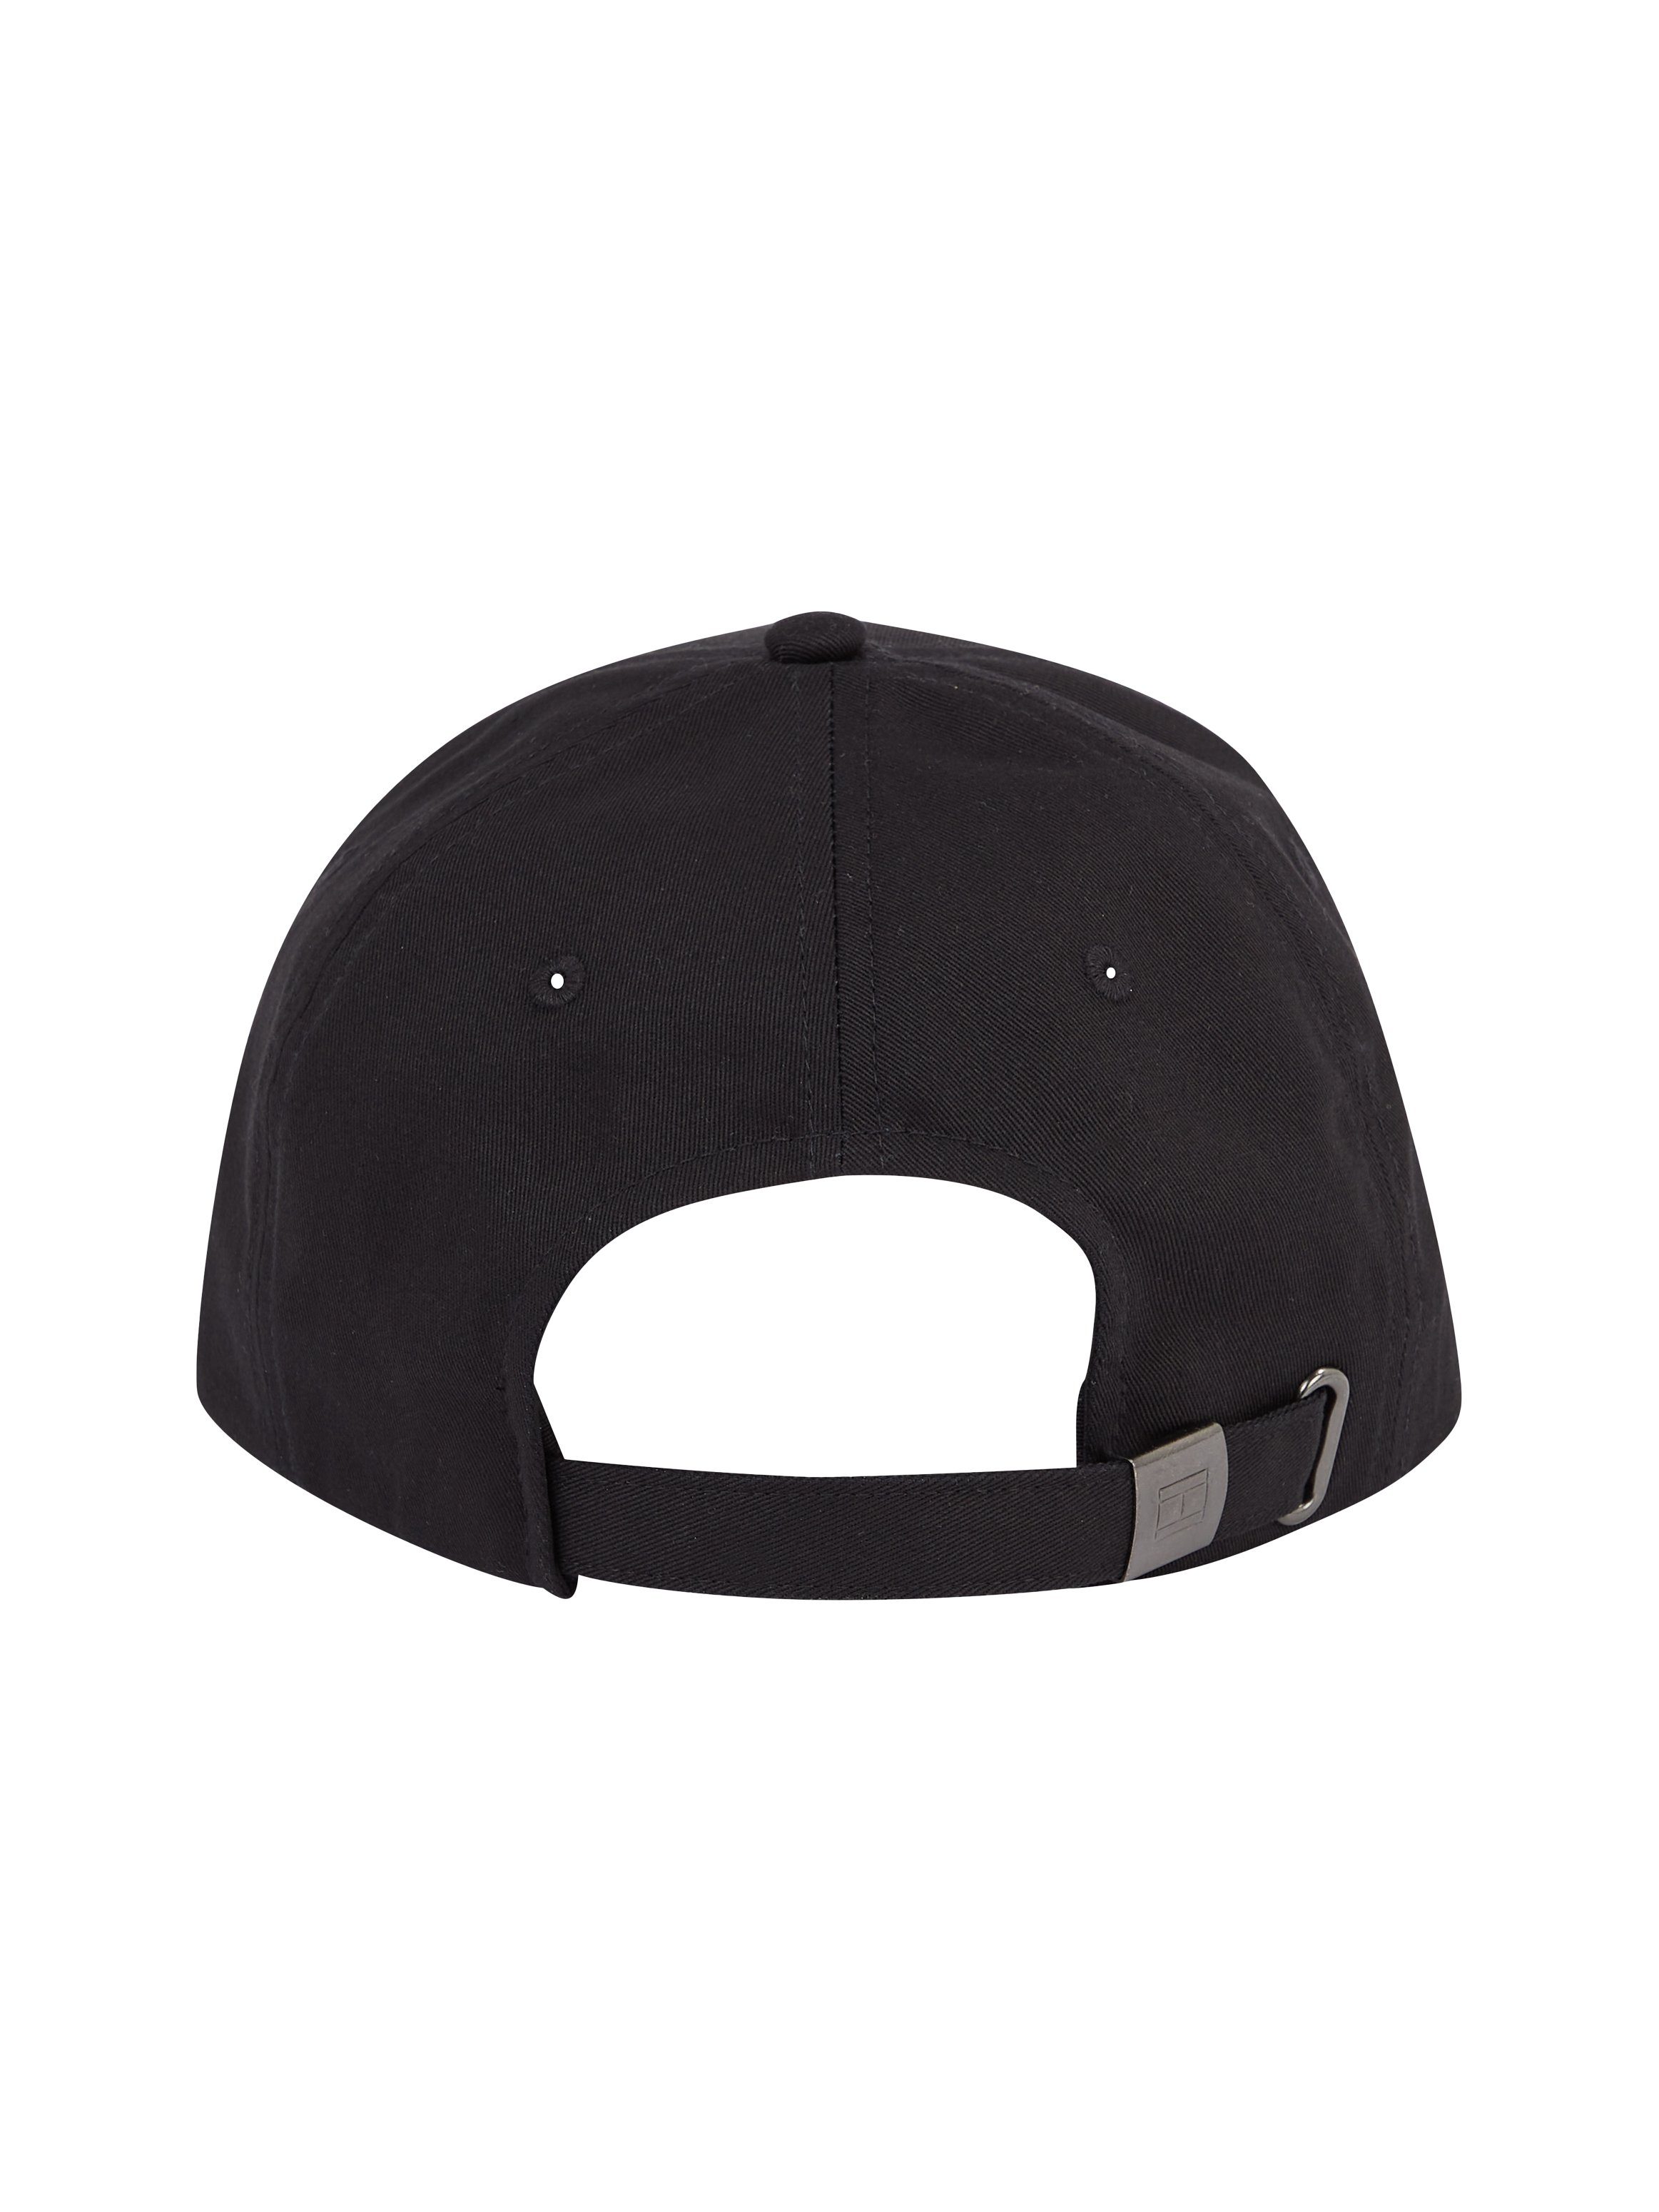 Tommy Hilfiger Baseball CAP mit Logo-Branding Black Cap TH SKYLINE